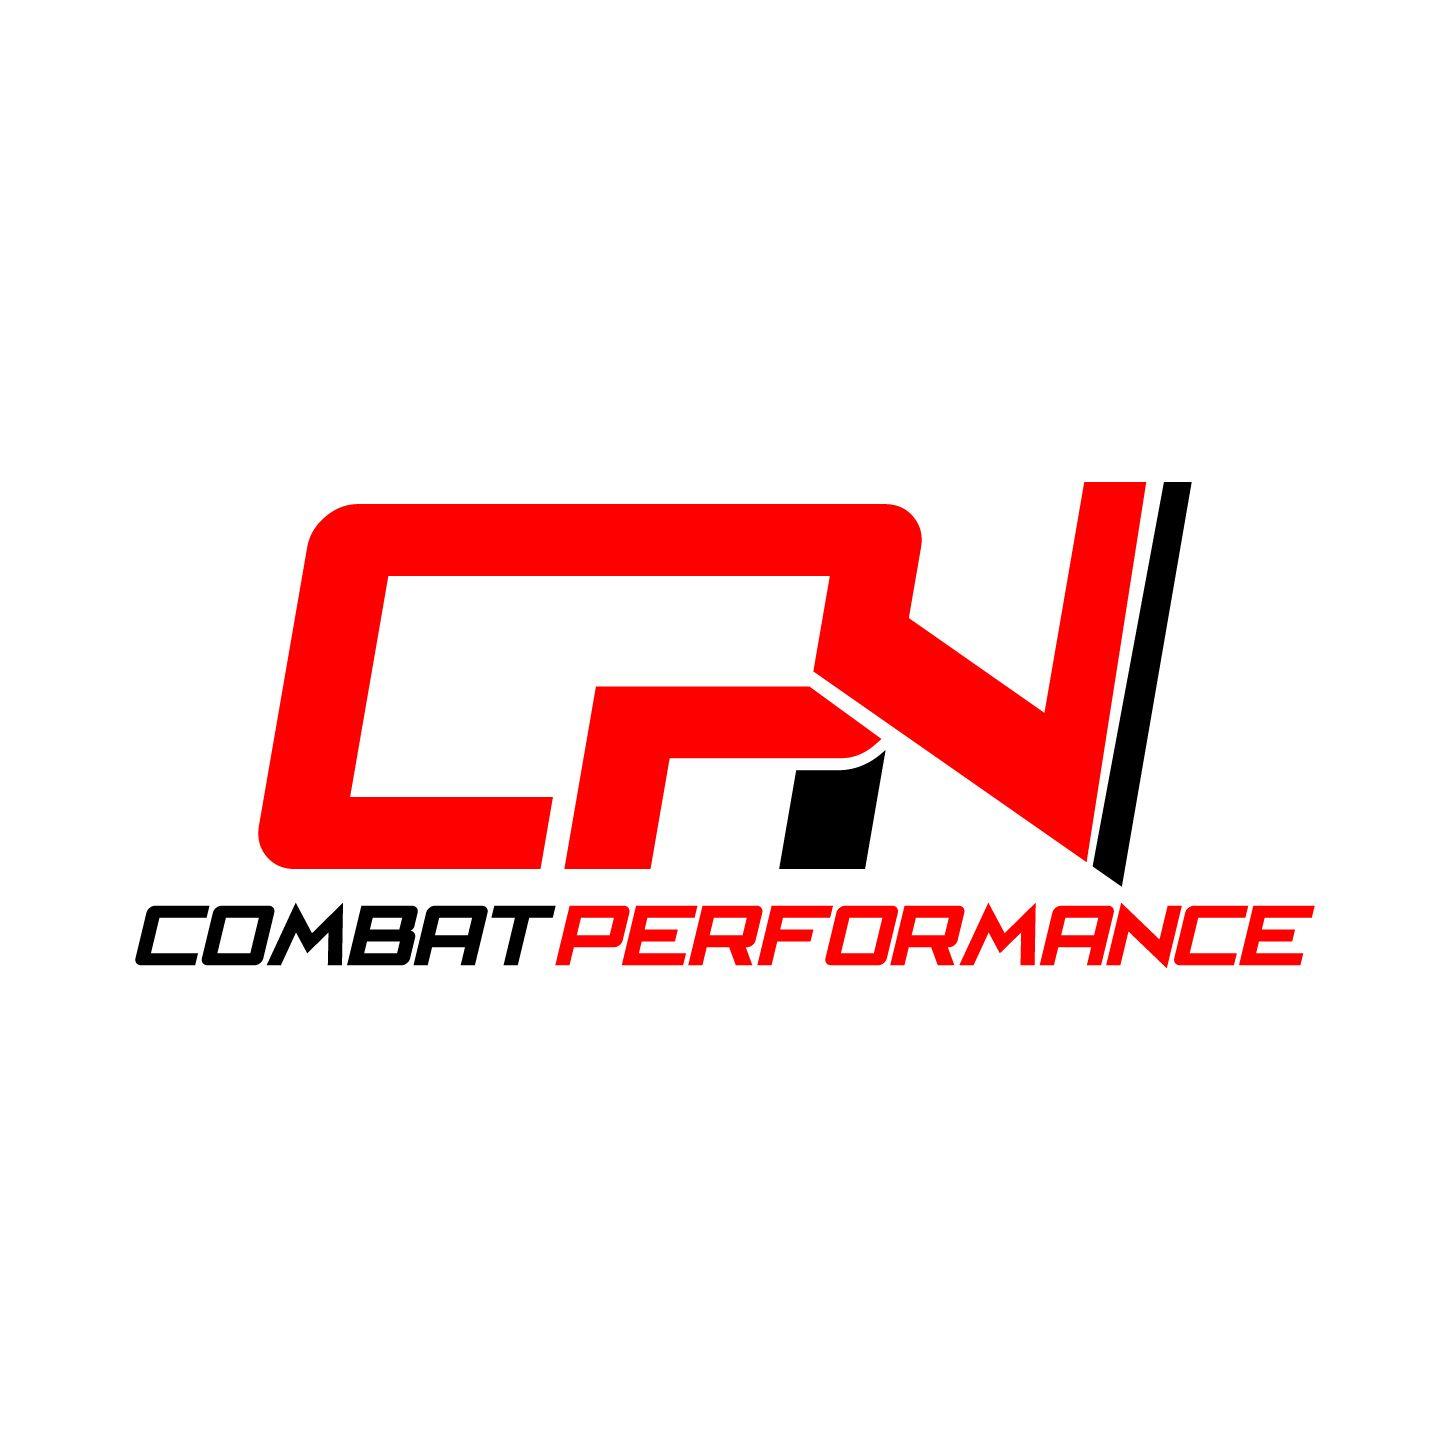 CPN Logo - Elegant, Playful, It Company Logo Design for CPN Combat Performance